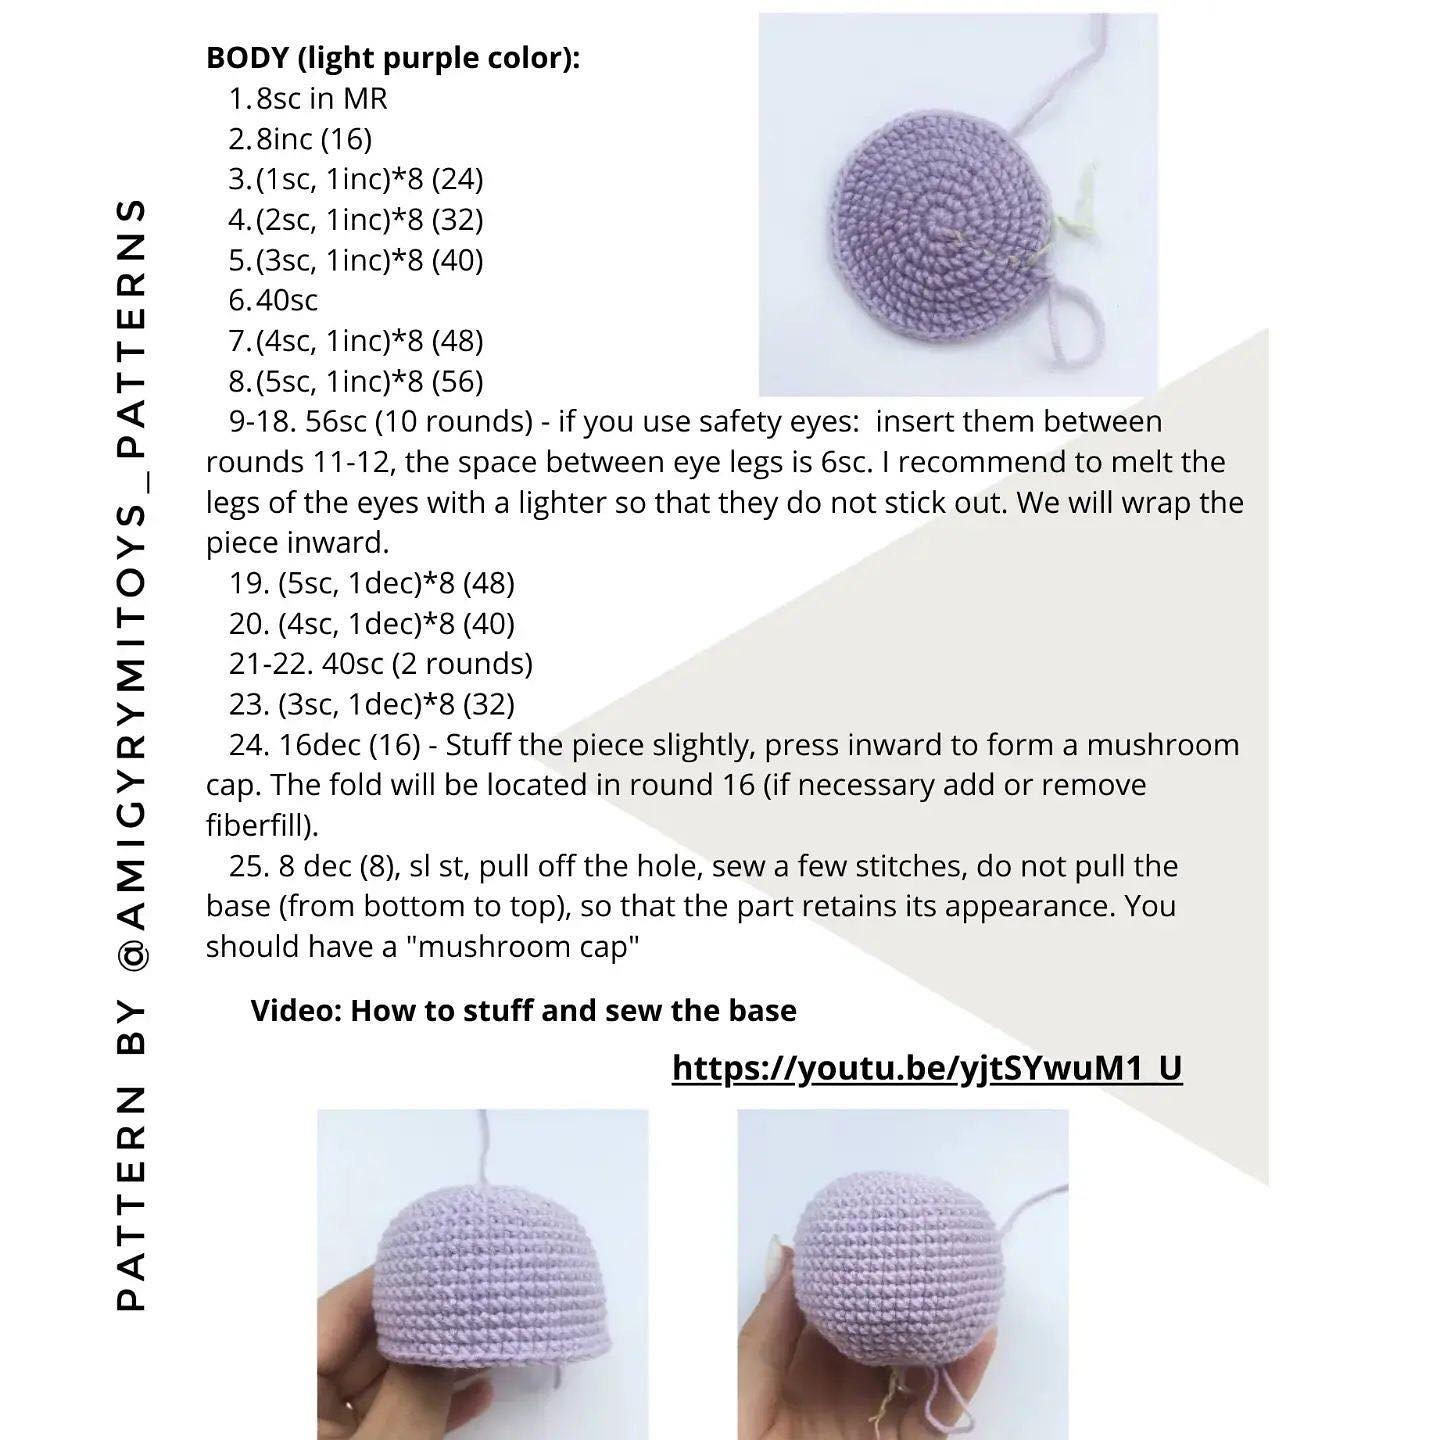 Free crochet jellyfish 💜 💞